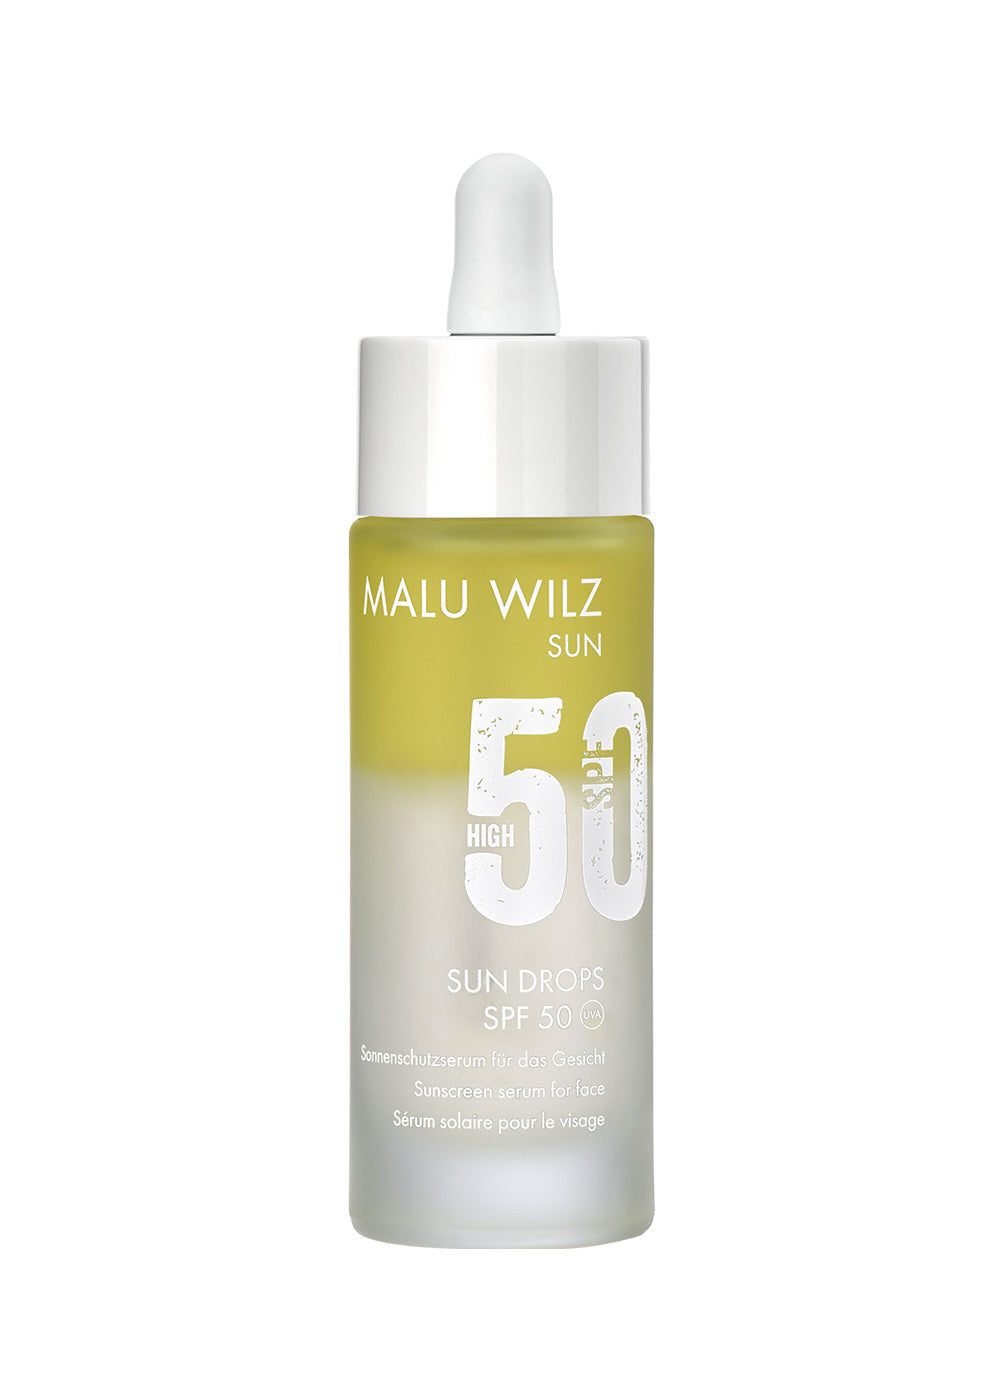 Malu Wilz Sun Drops SPF 50